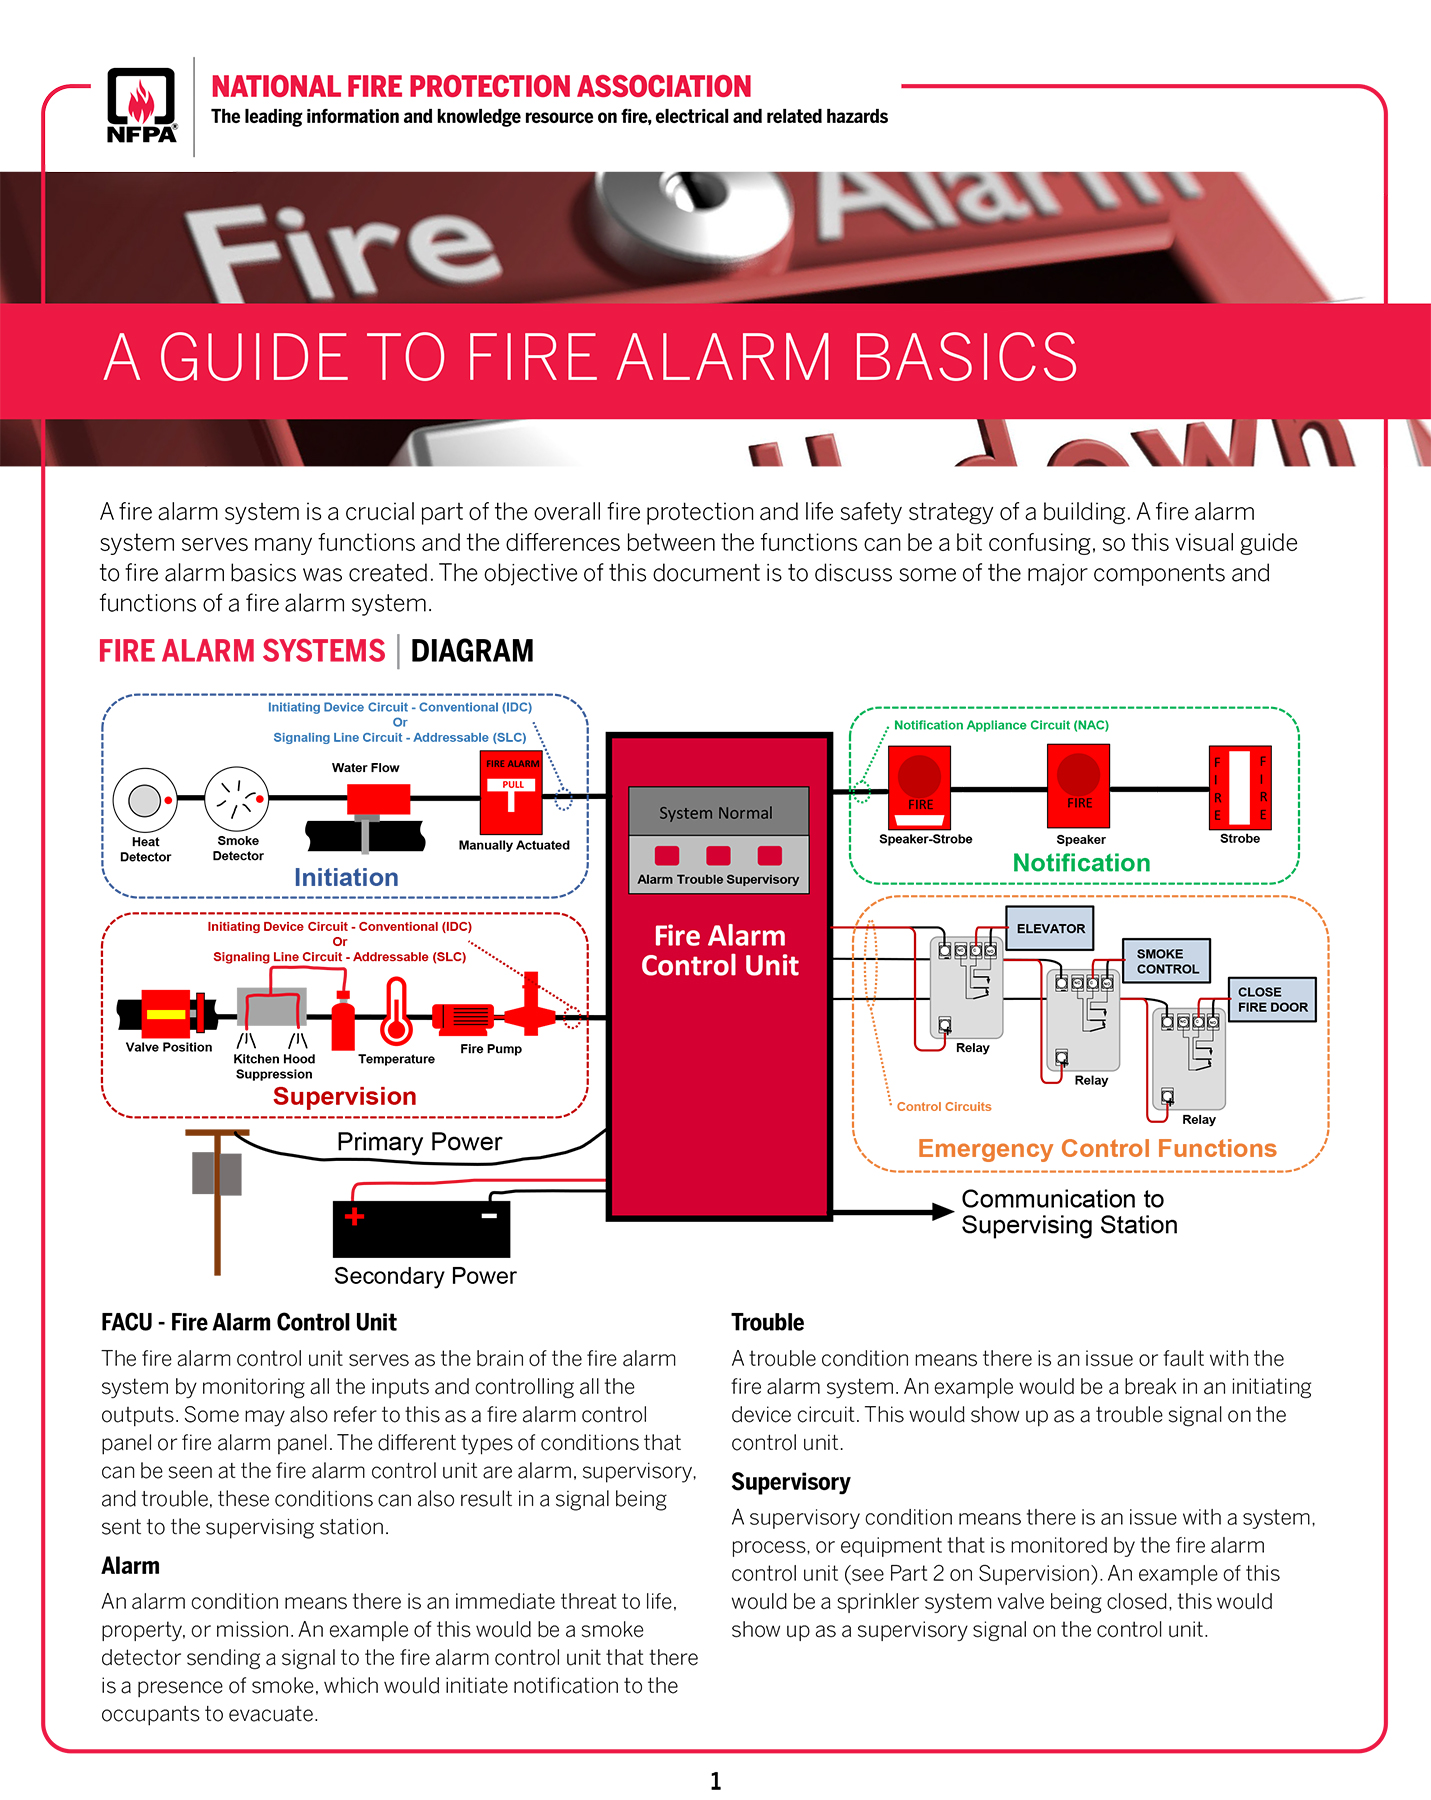 Fire Alarm Basics Fact Sheet.